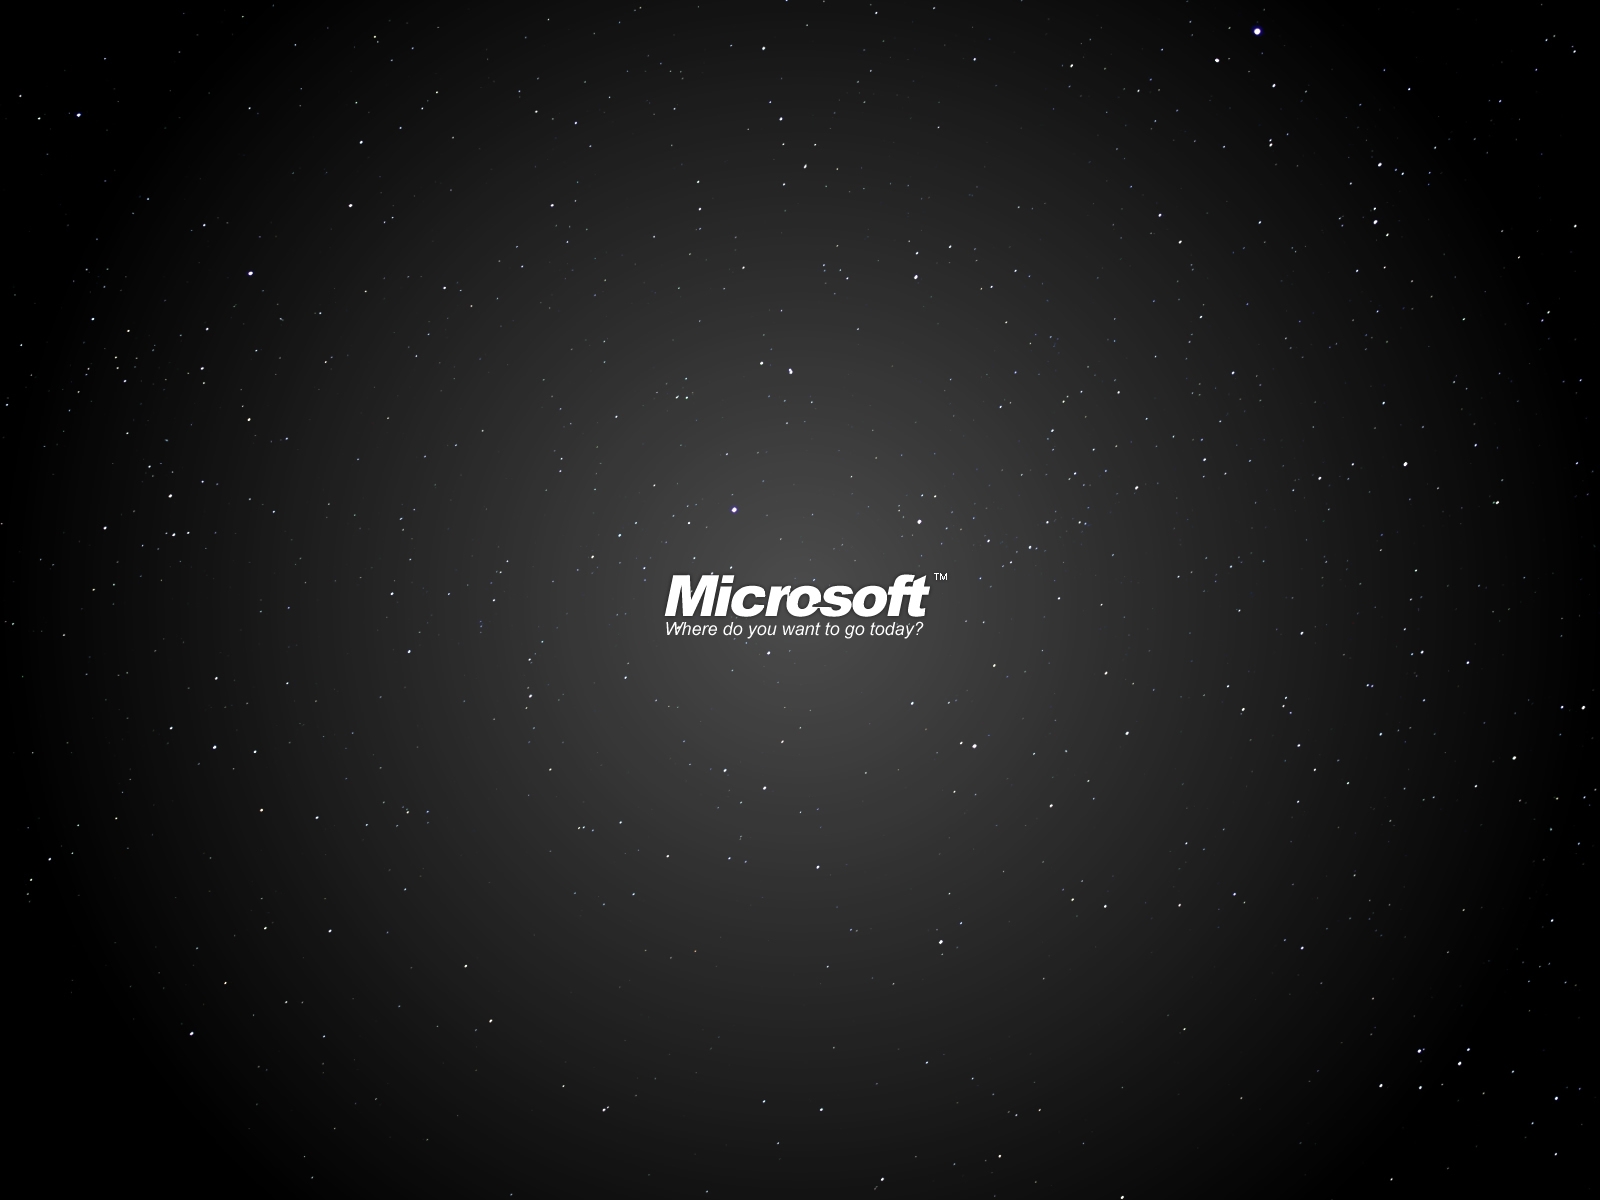 Microsoft Desktop Wallpaper Pictures In High Definition